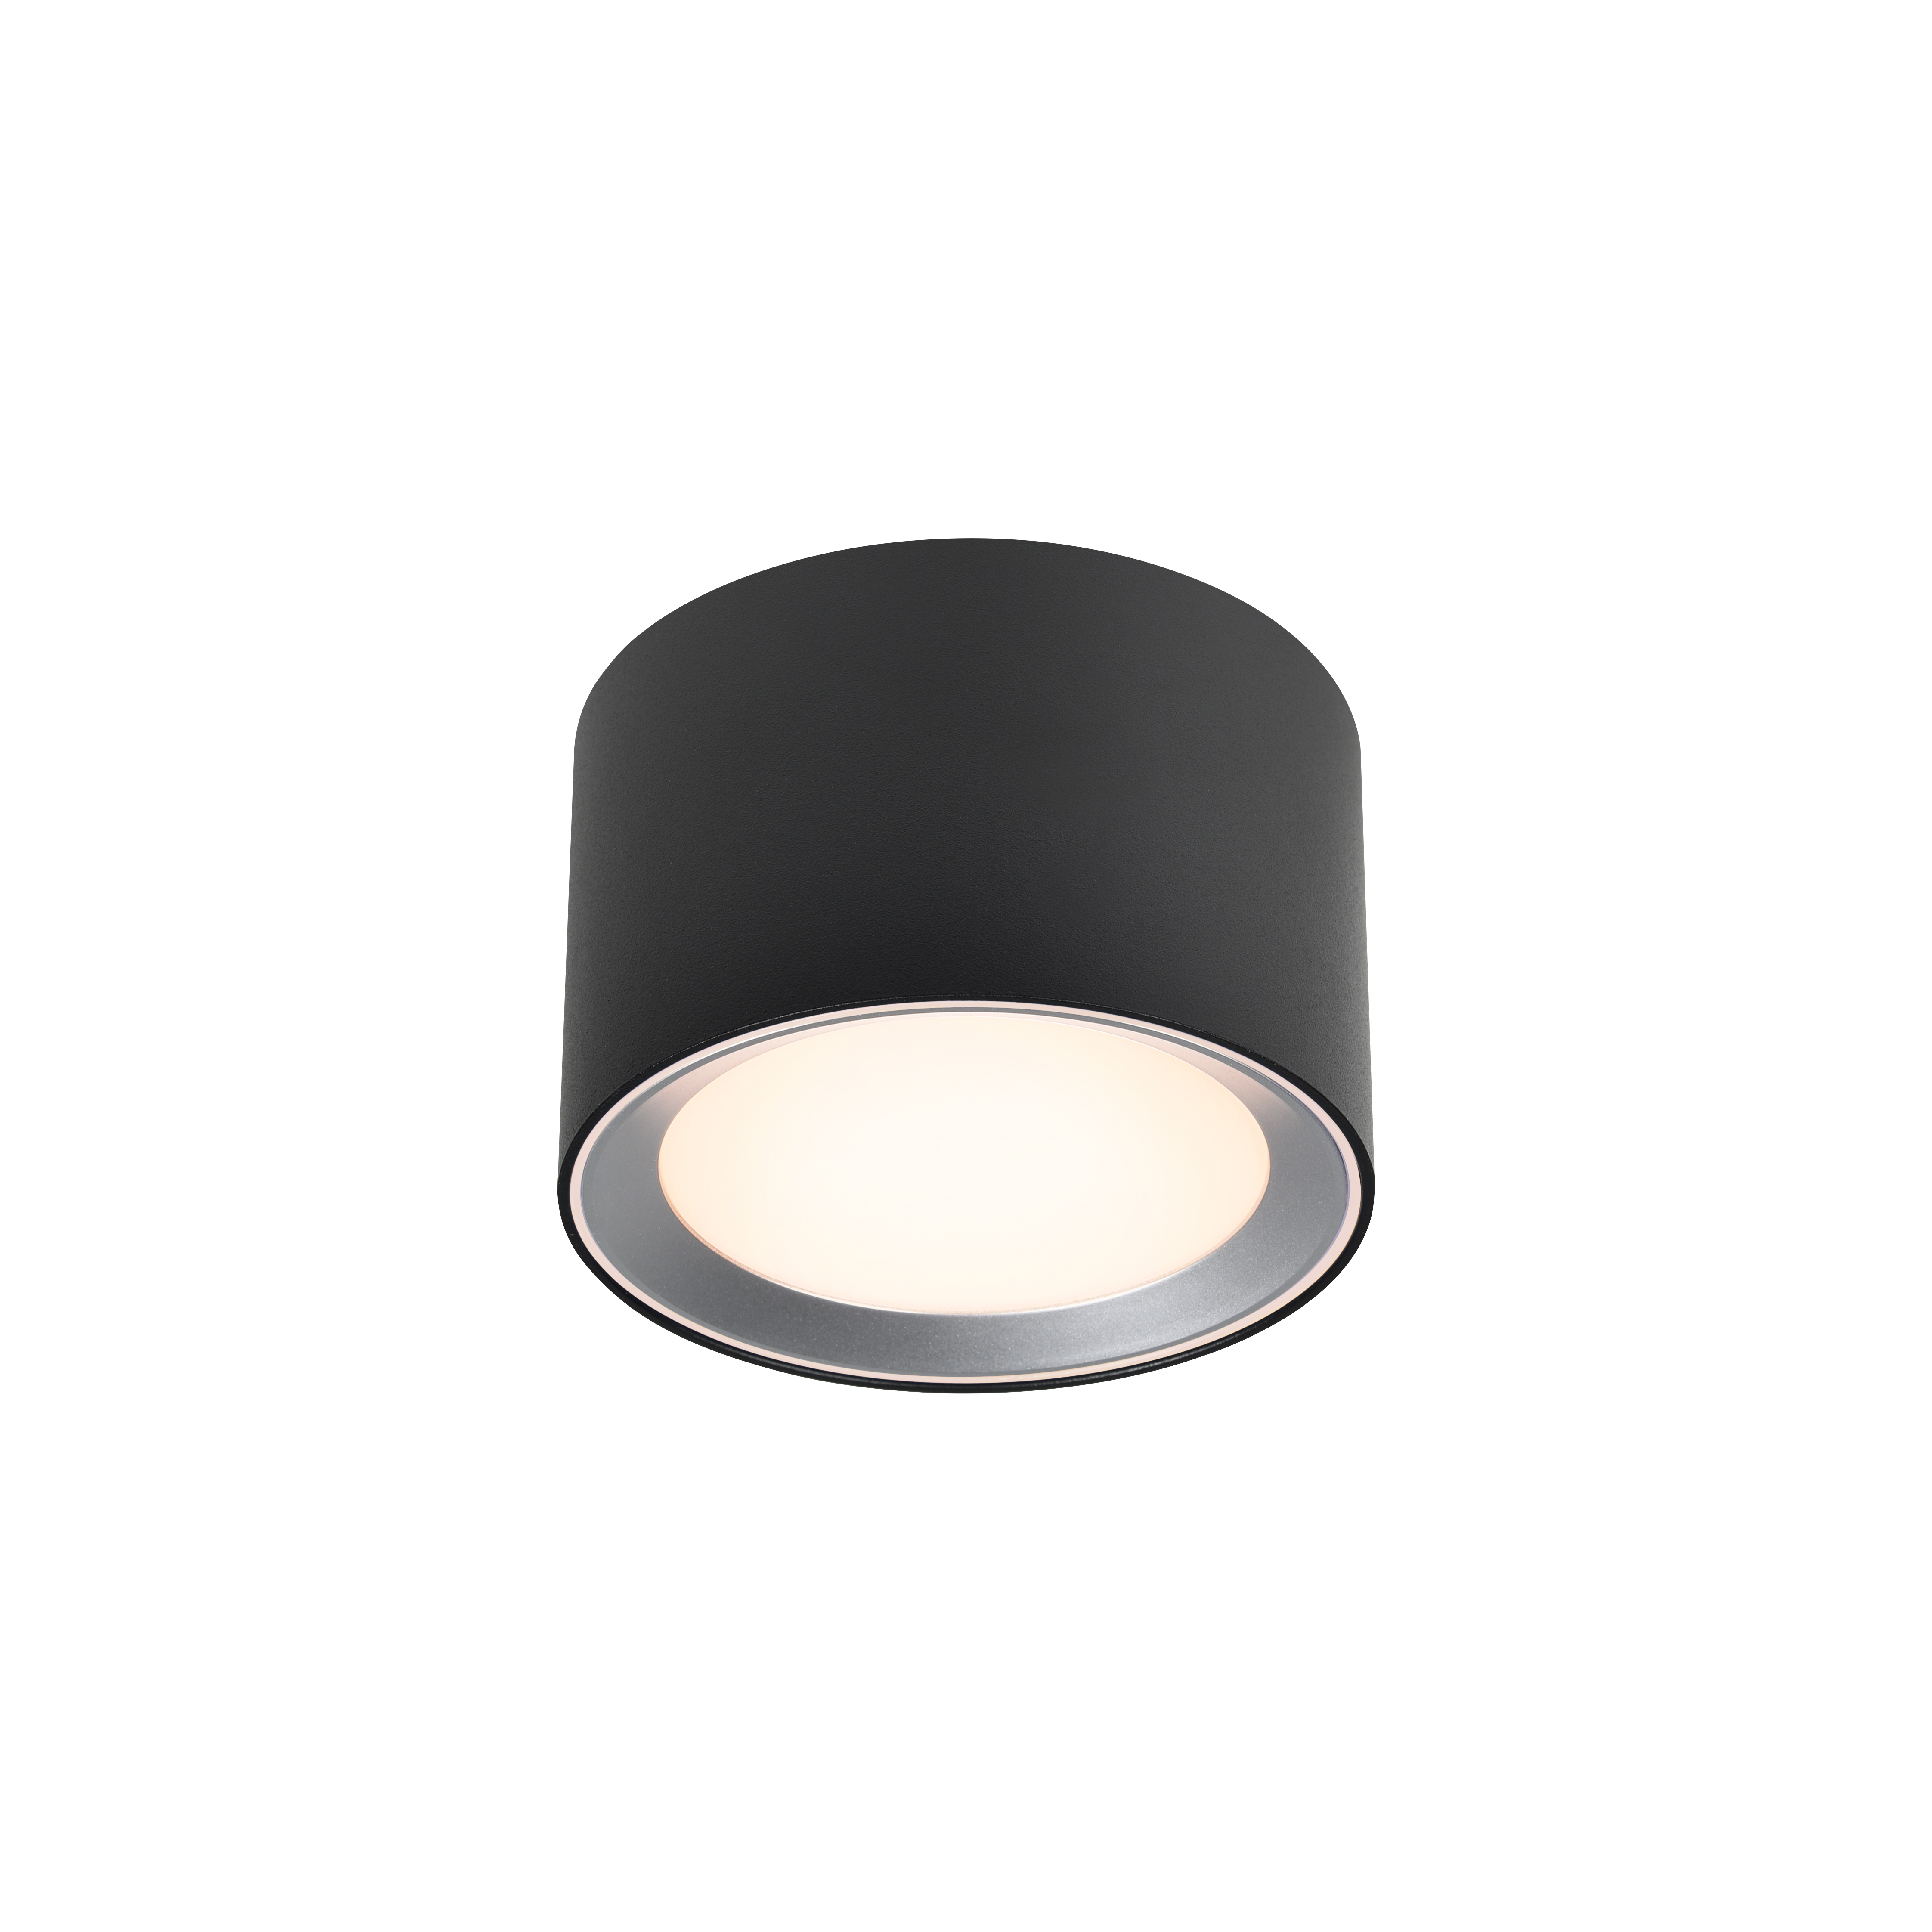 | Black Smart Landon Ceiling light |